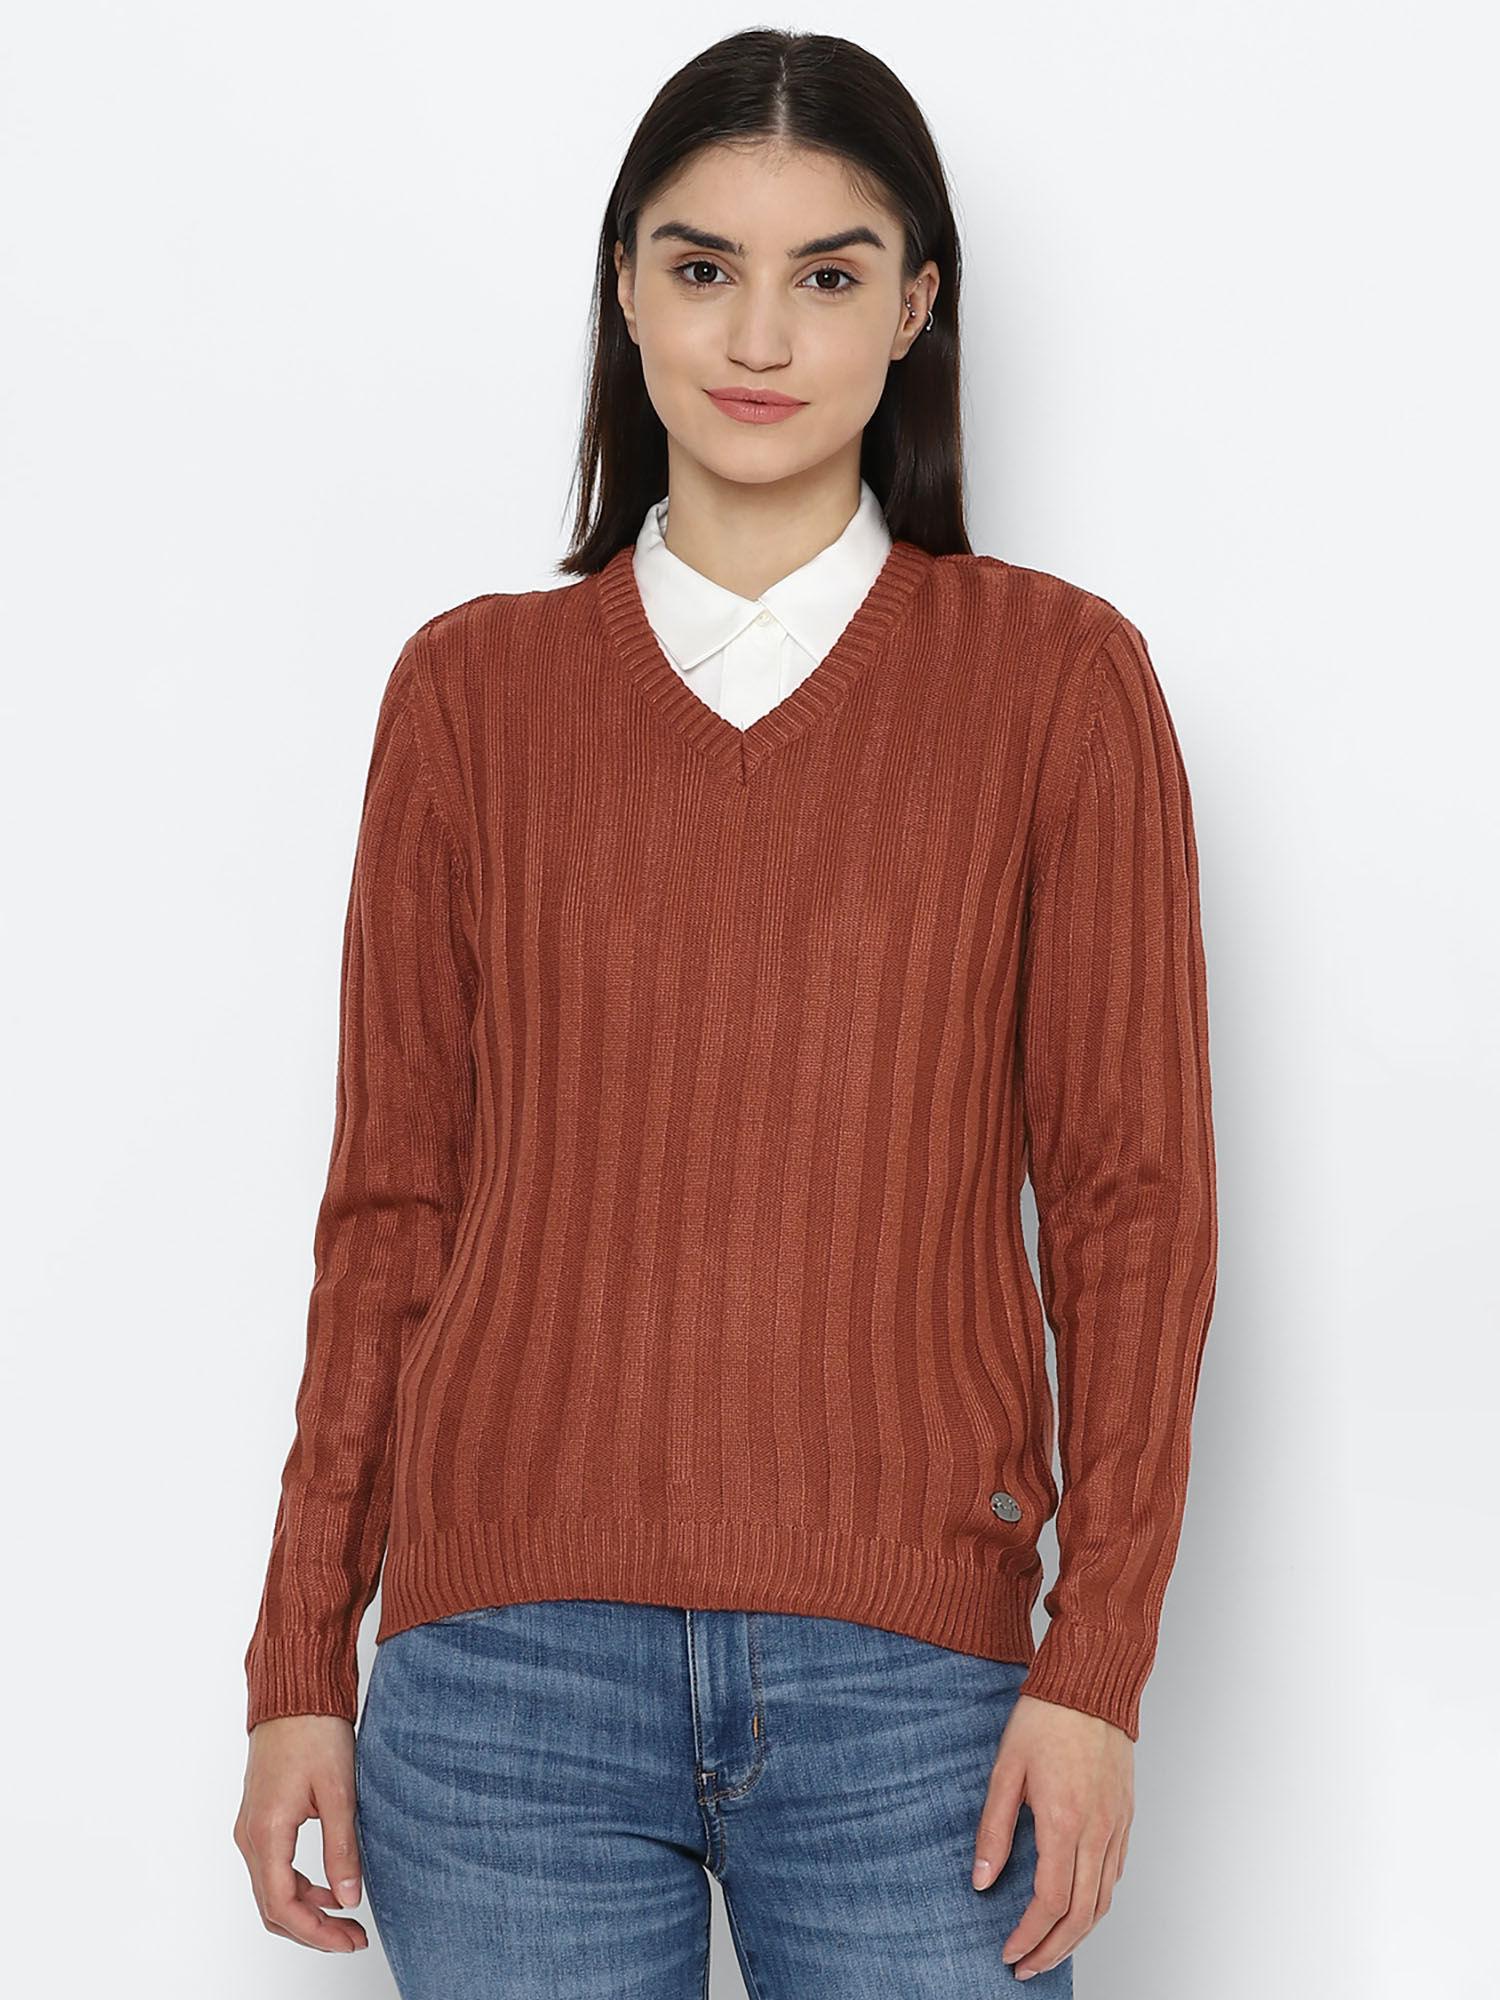 maroon-sweater